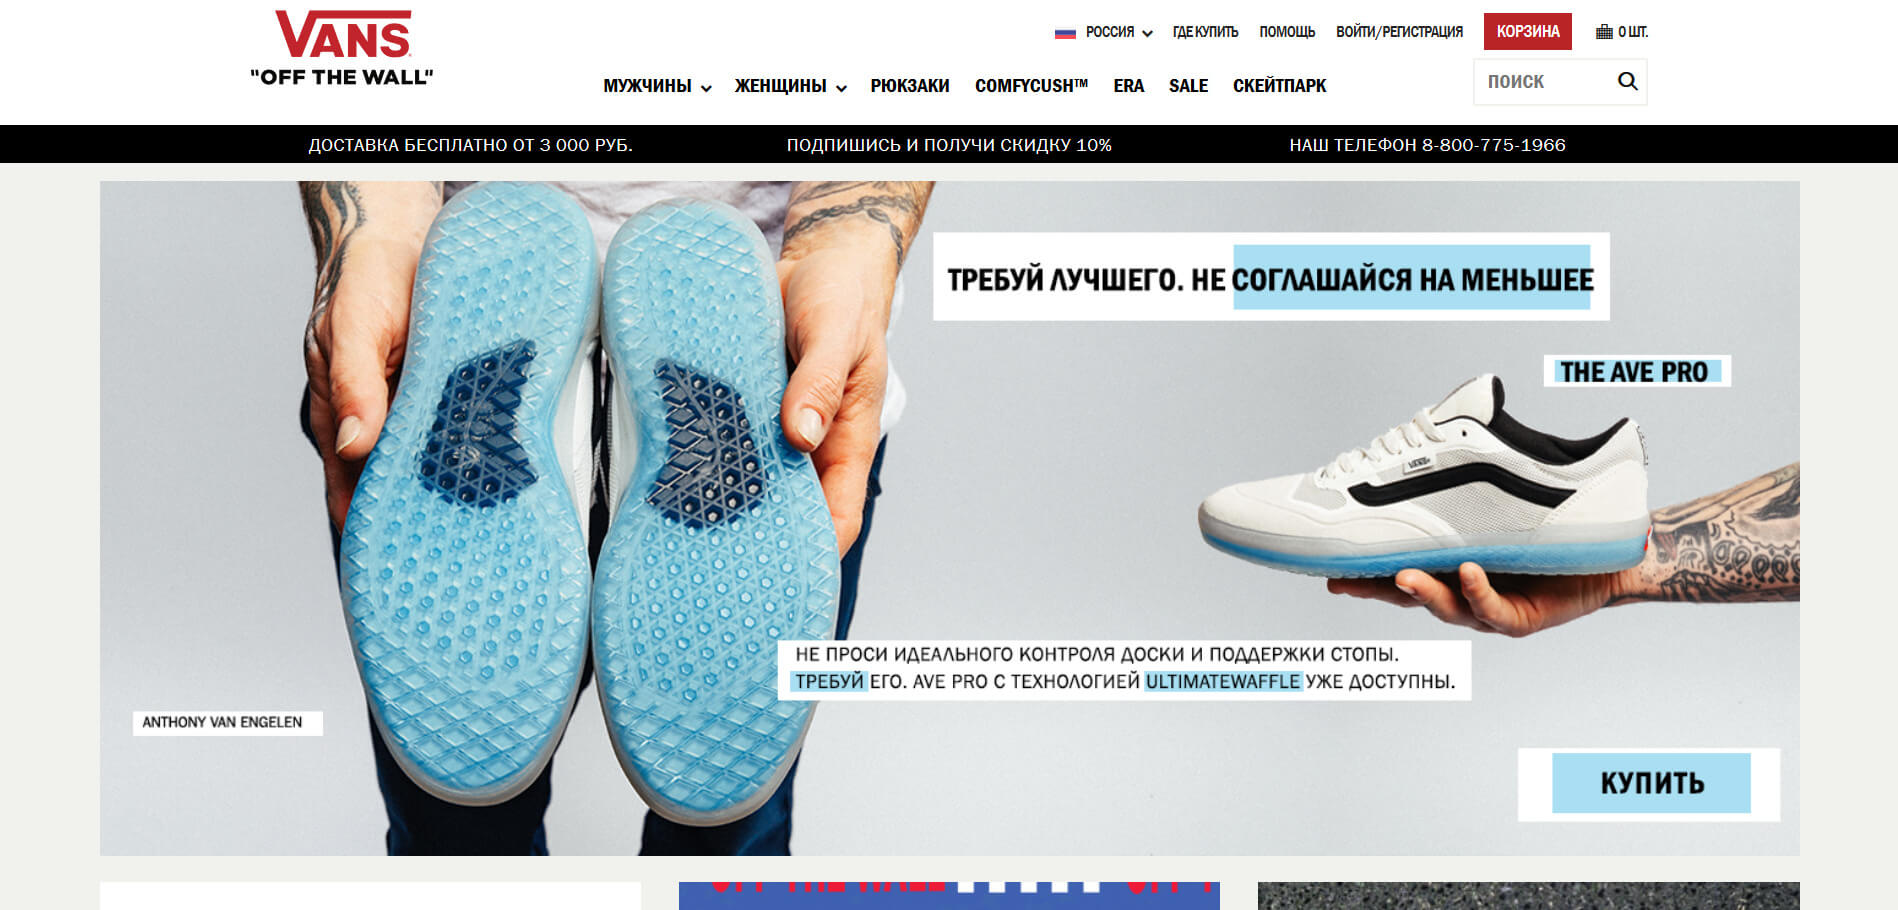 Обувь Интернет Магазин Кострома